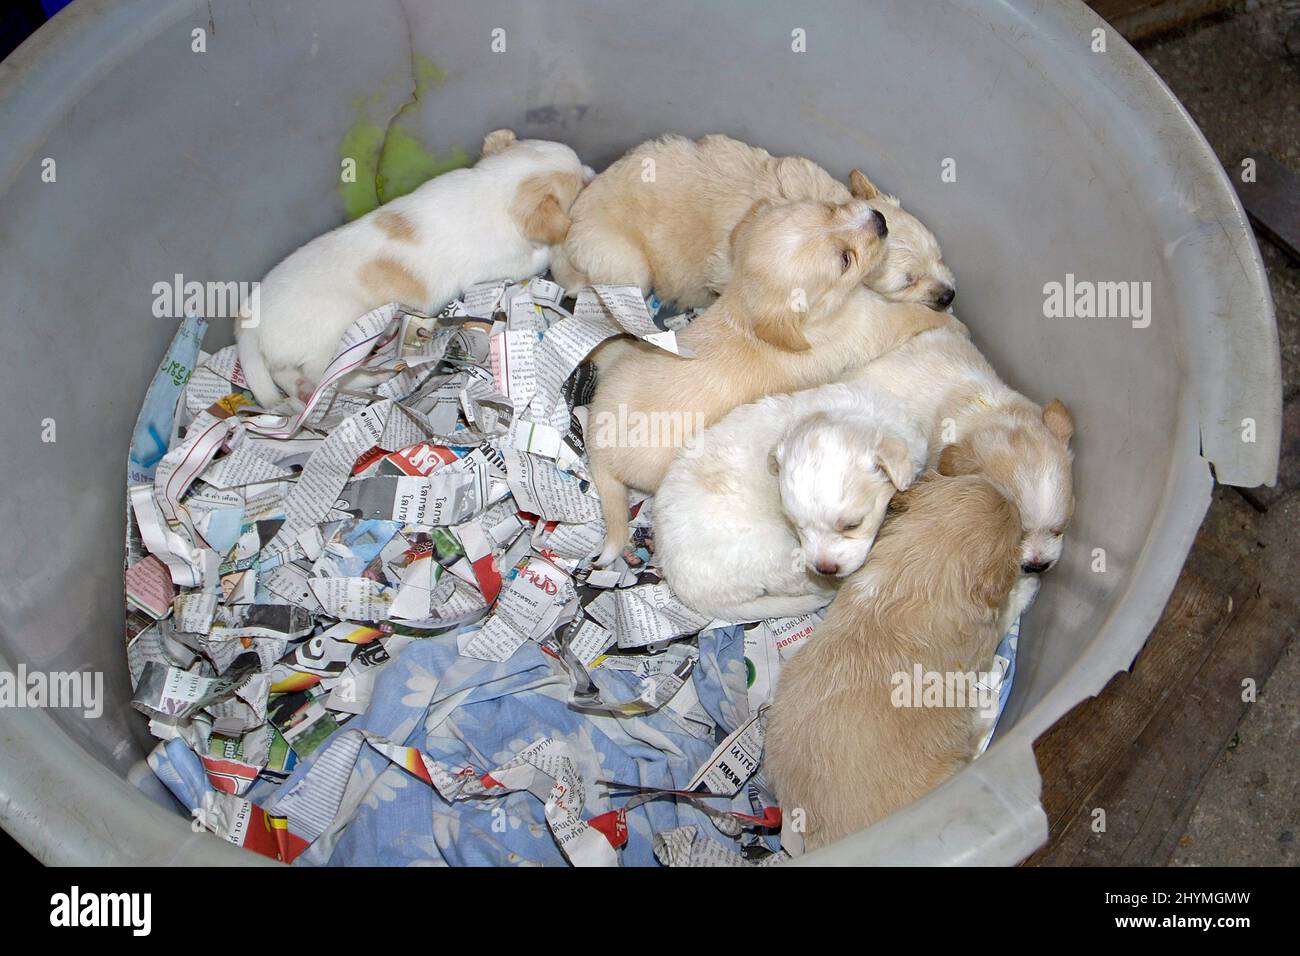 puppies for sale in a broken plastic bowl at Chatuchak Market , Thailand, Bangkok Stock Photo